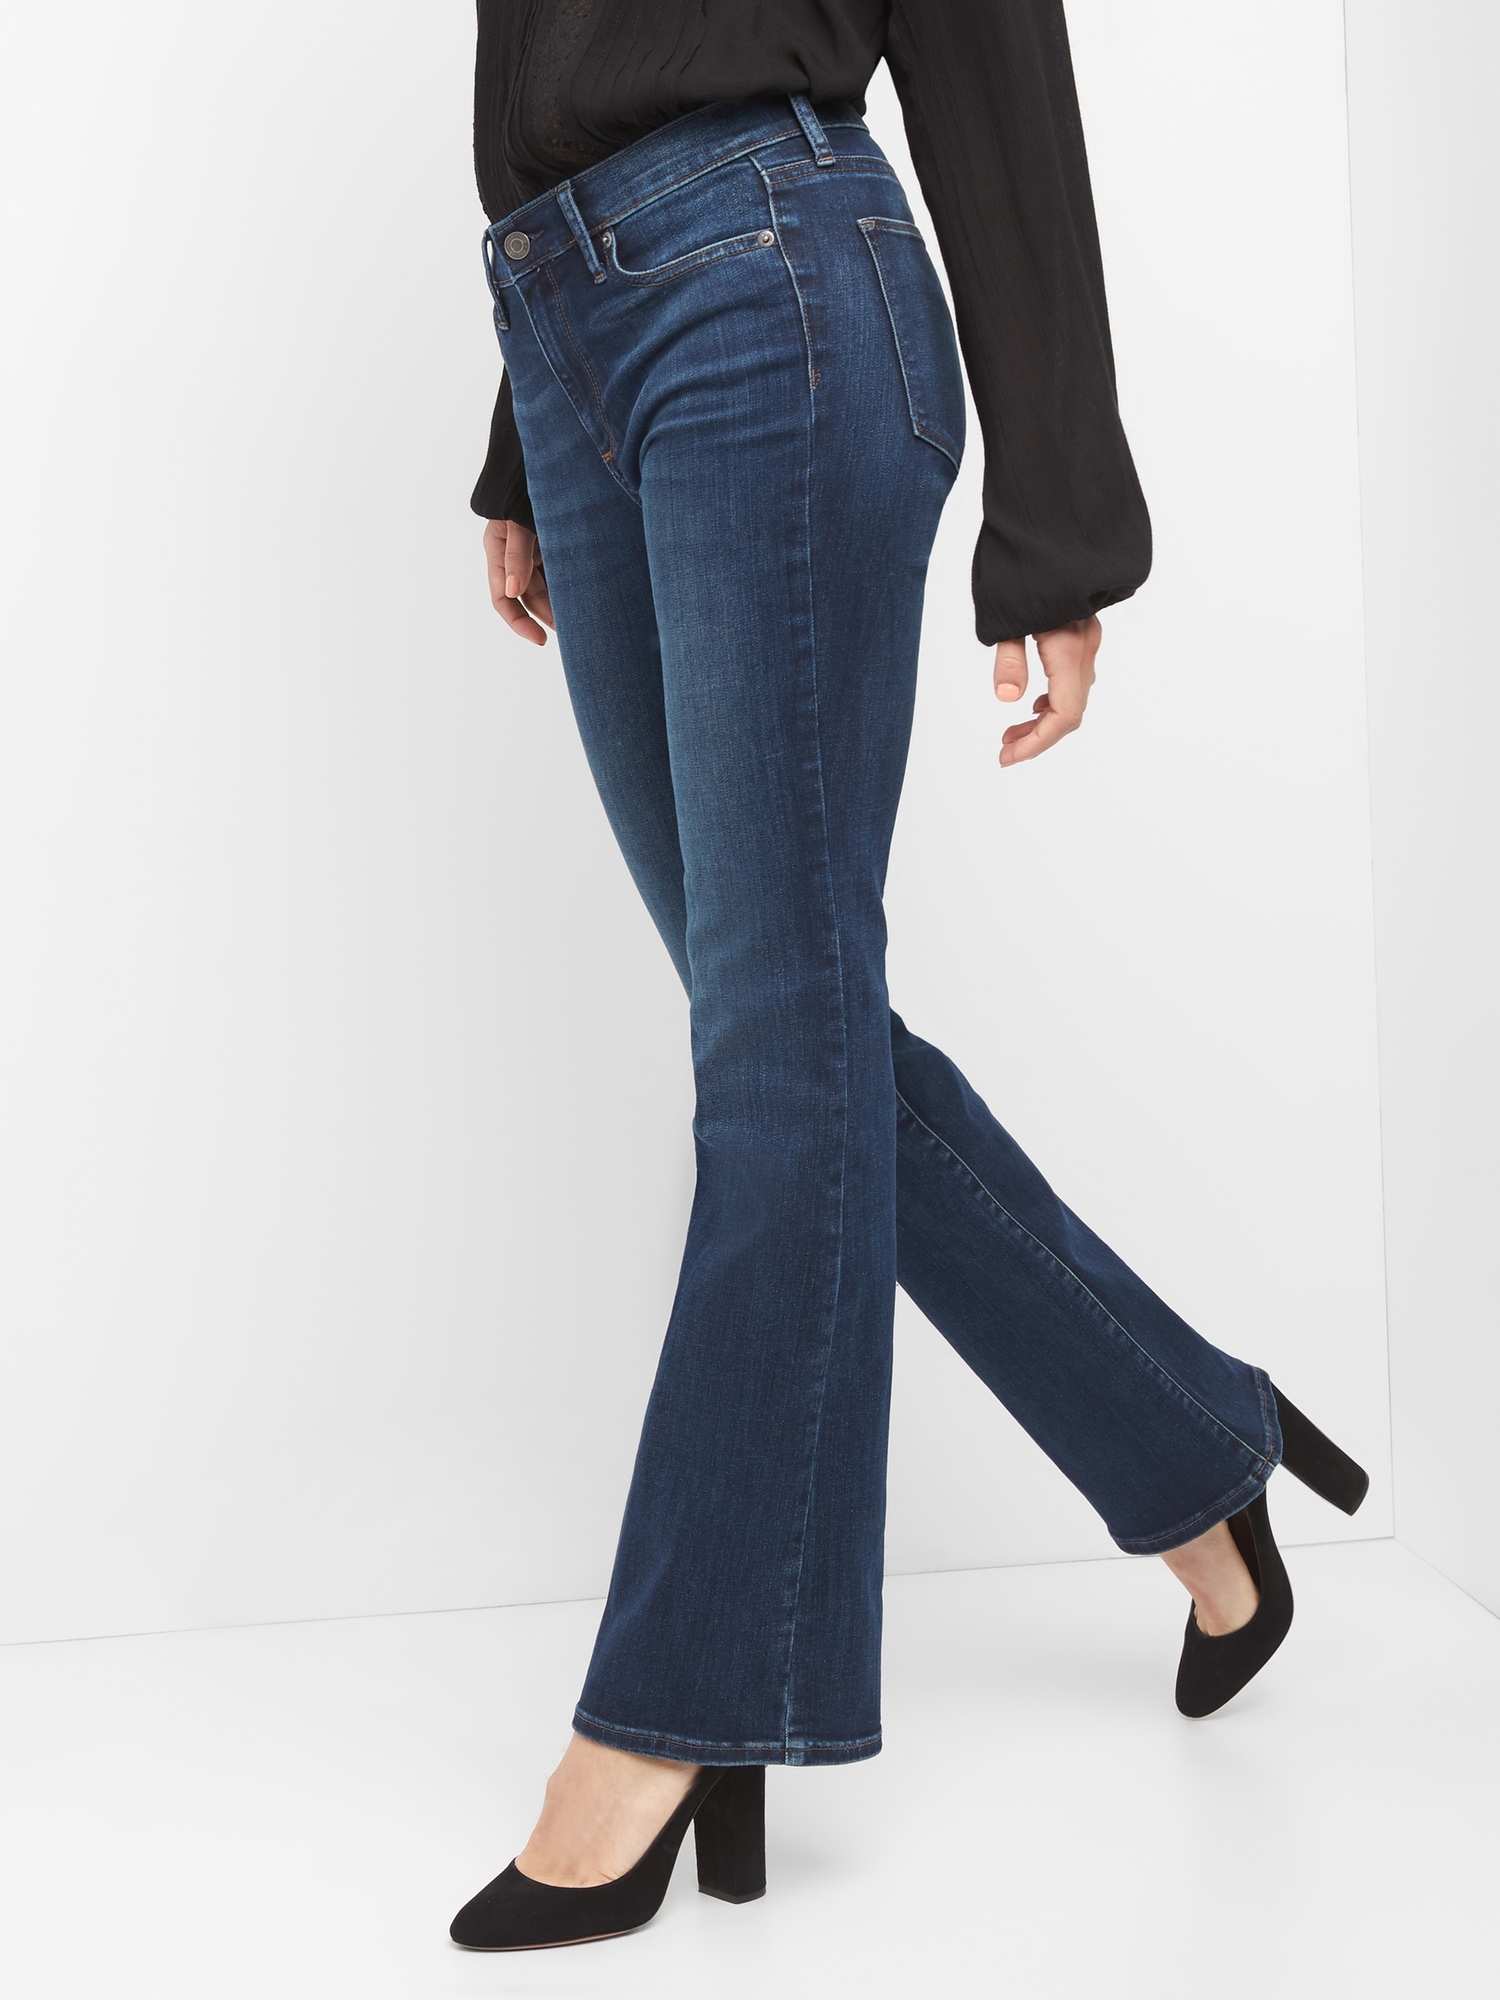 gap 1969 curvy boot jeans